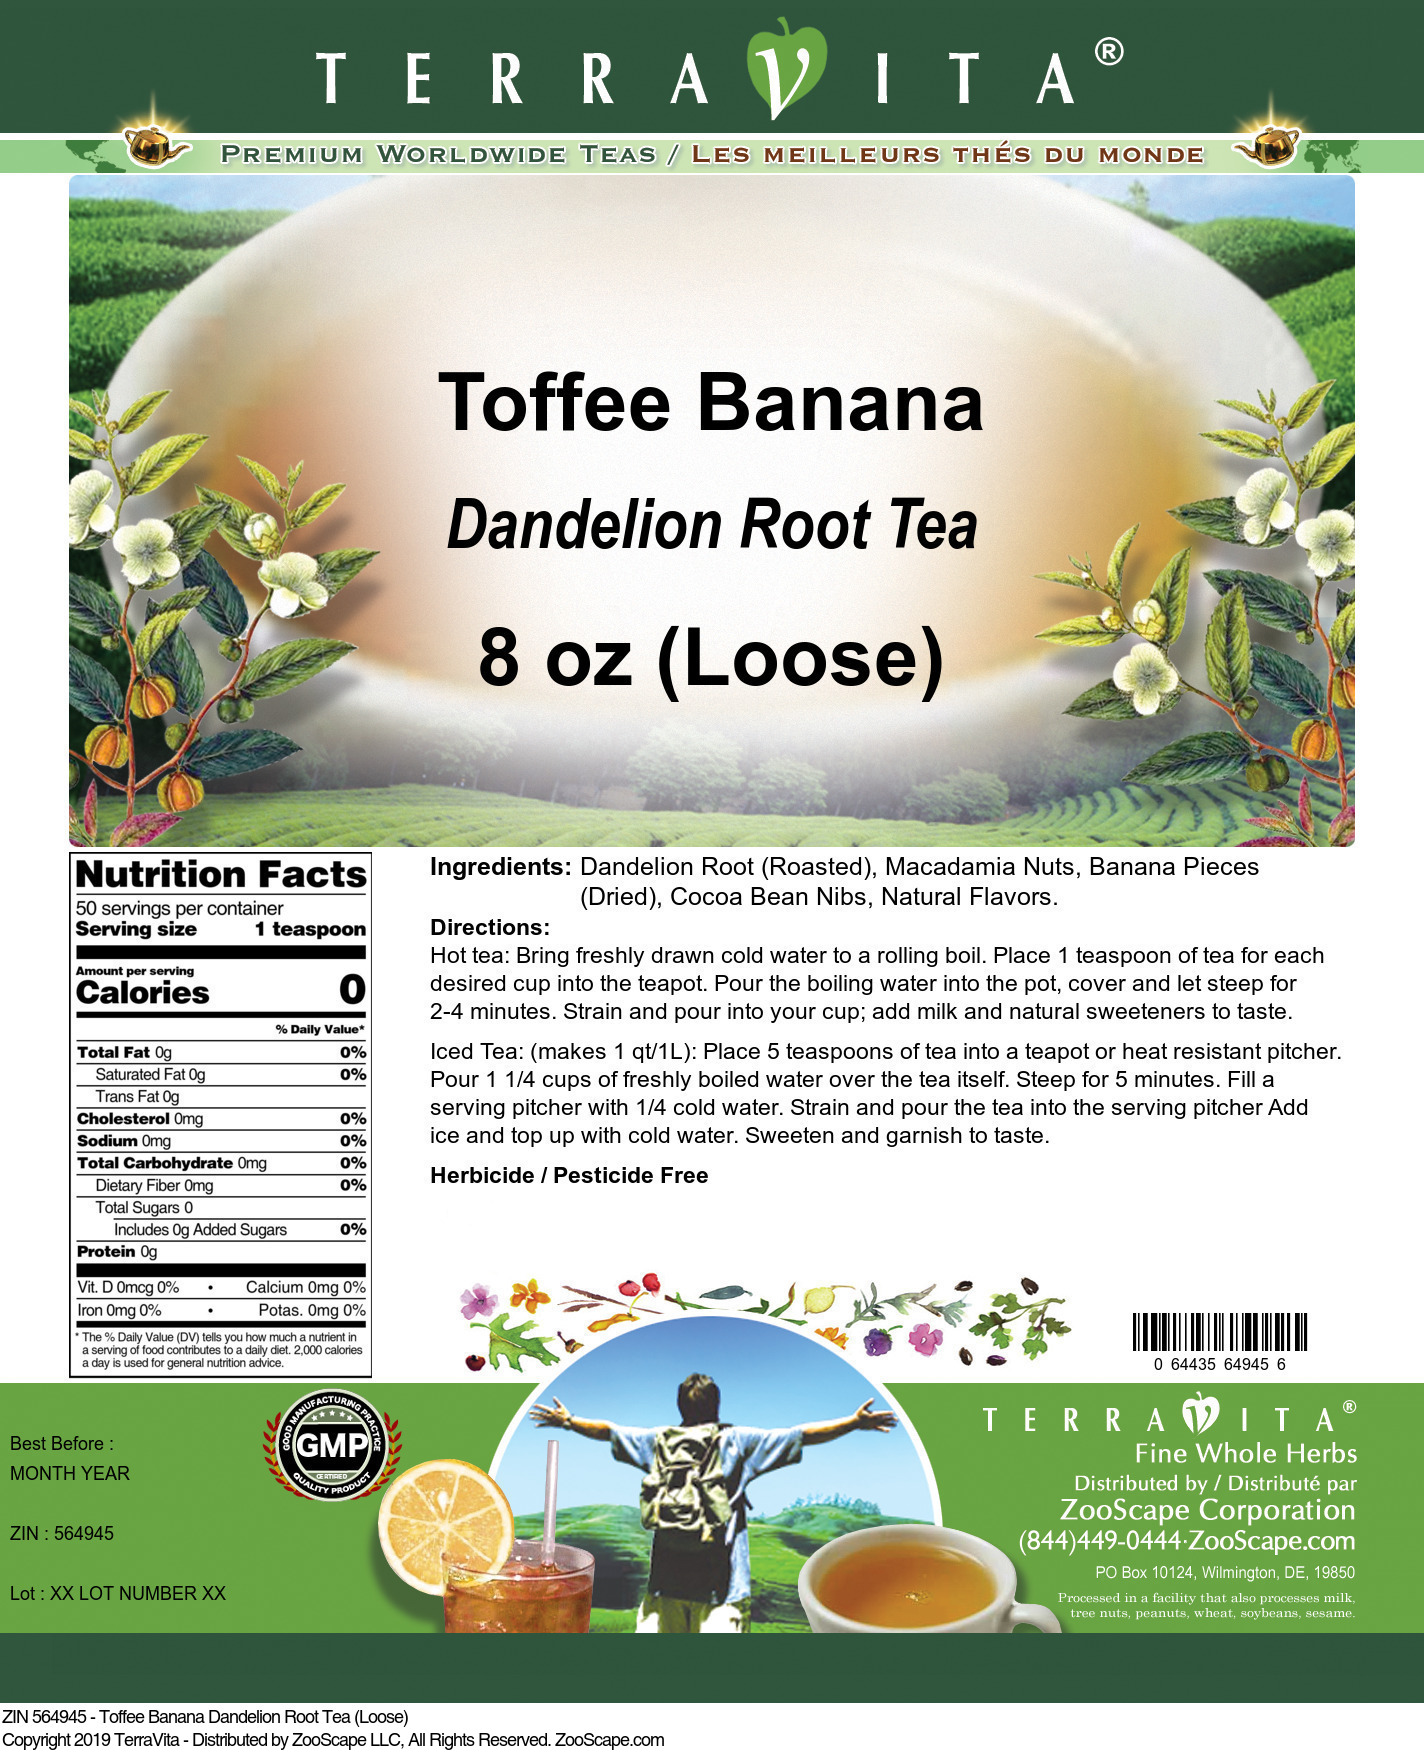 Toffee Banana Dandelion Root Tea (Loose) - Label